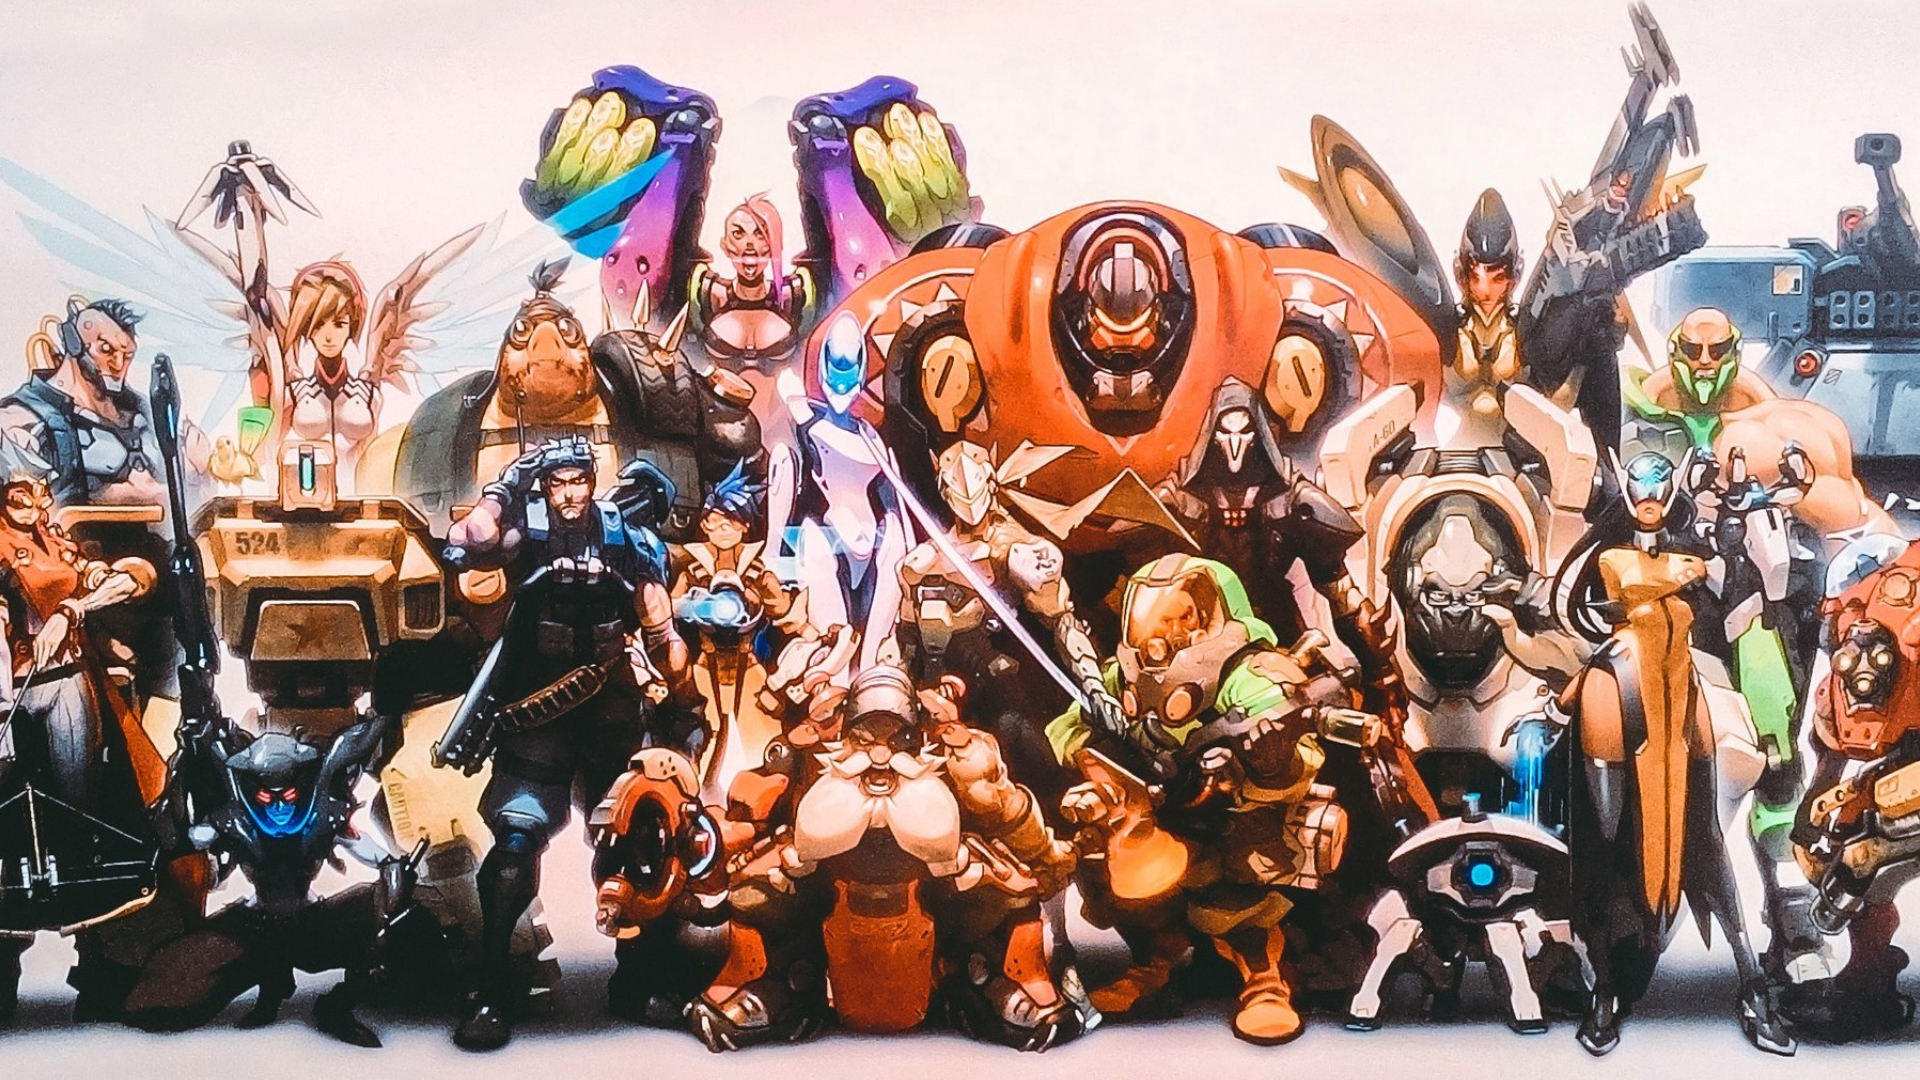 overwatch heroes wallpaper,dessin animé,figurine,personnage fictif,jouet,dessin animé